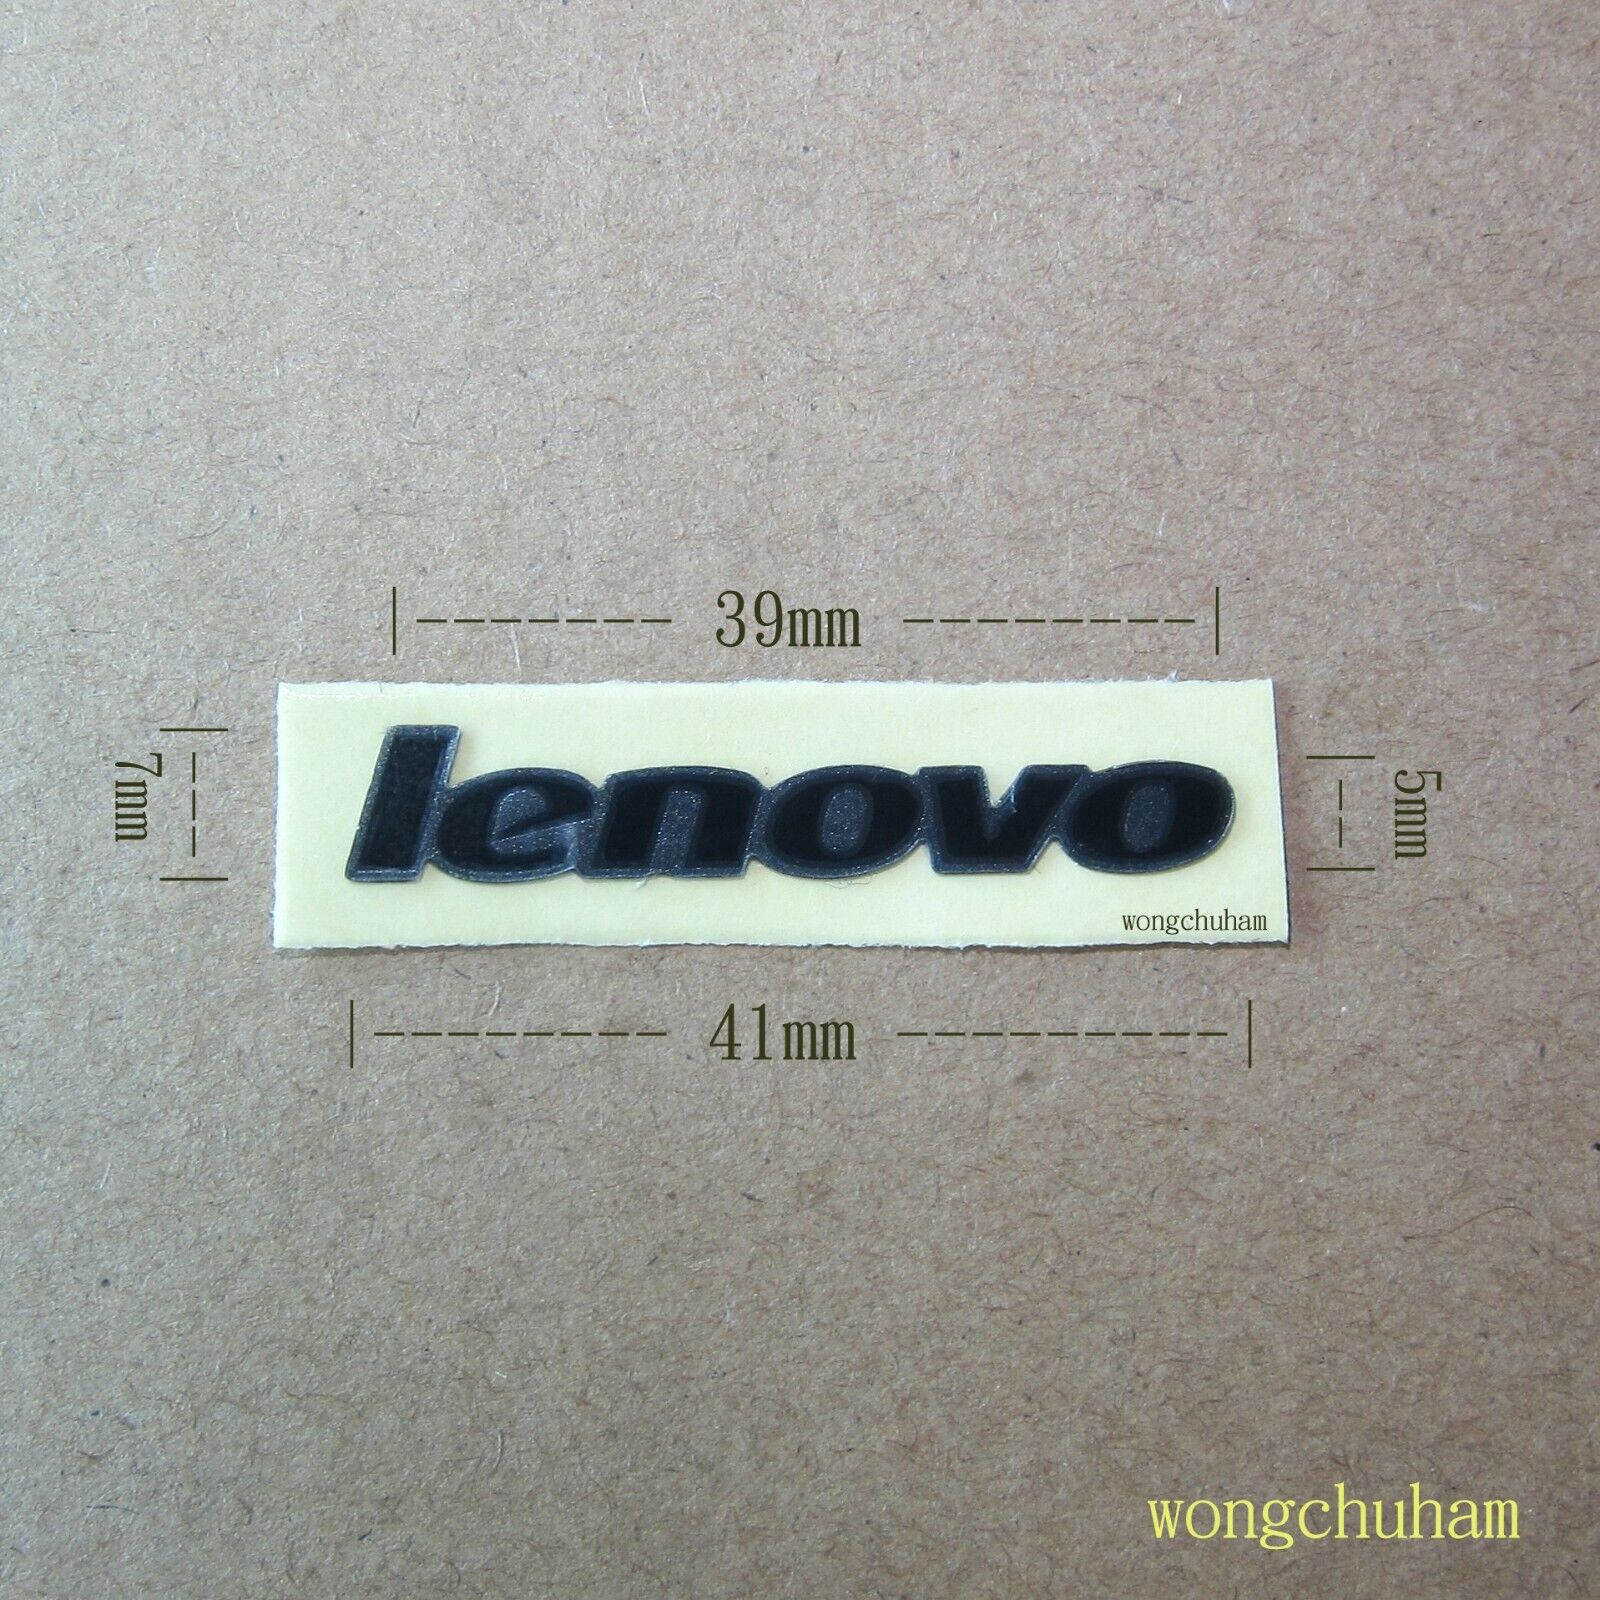 lenovo sticker 7mm x 41mm  - New Genuine Good Quality